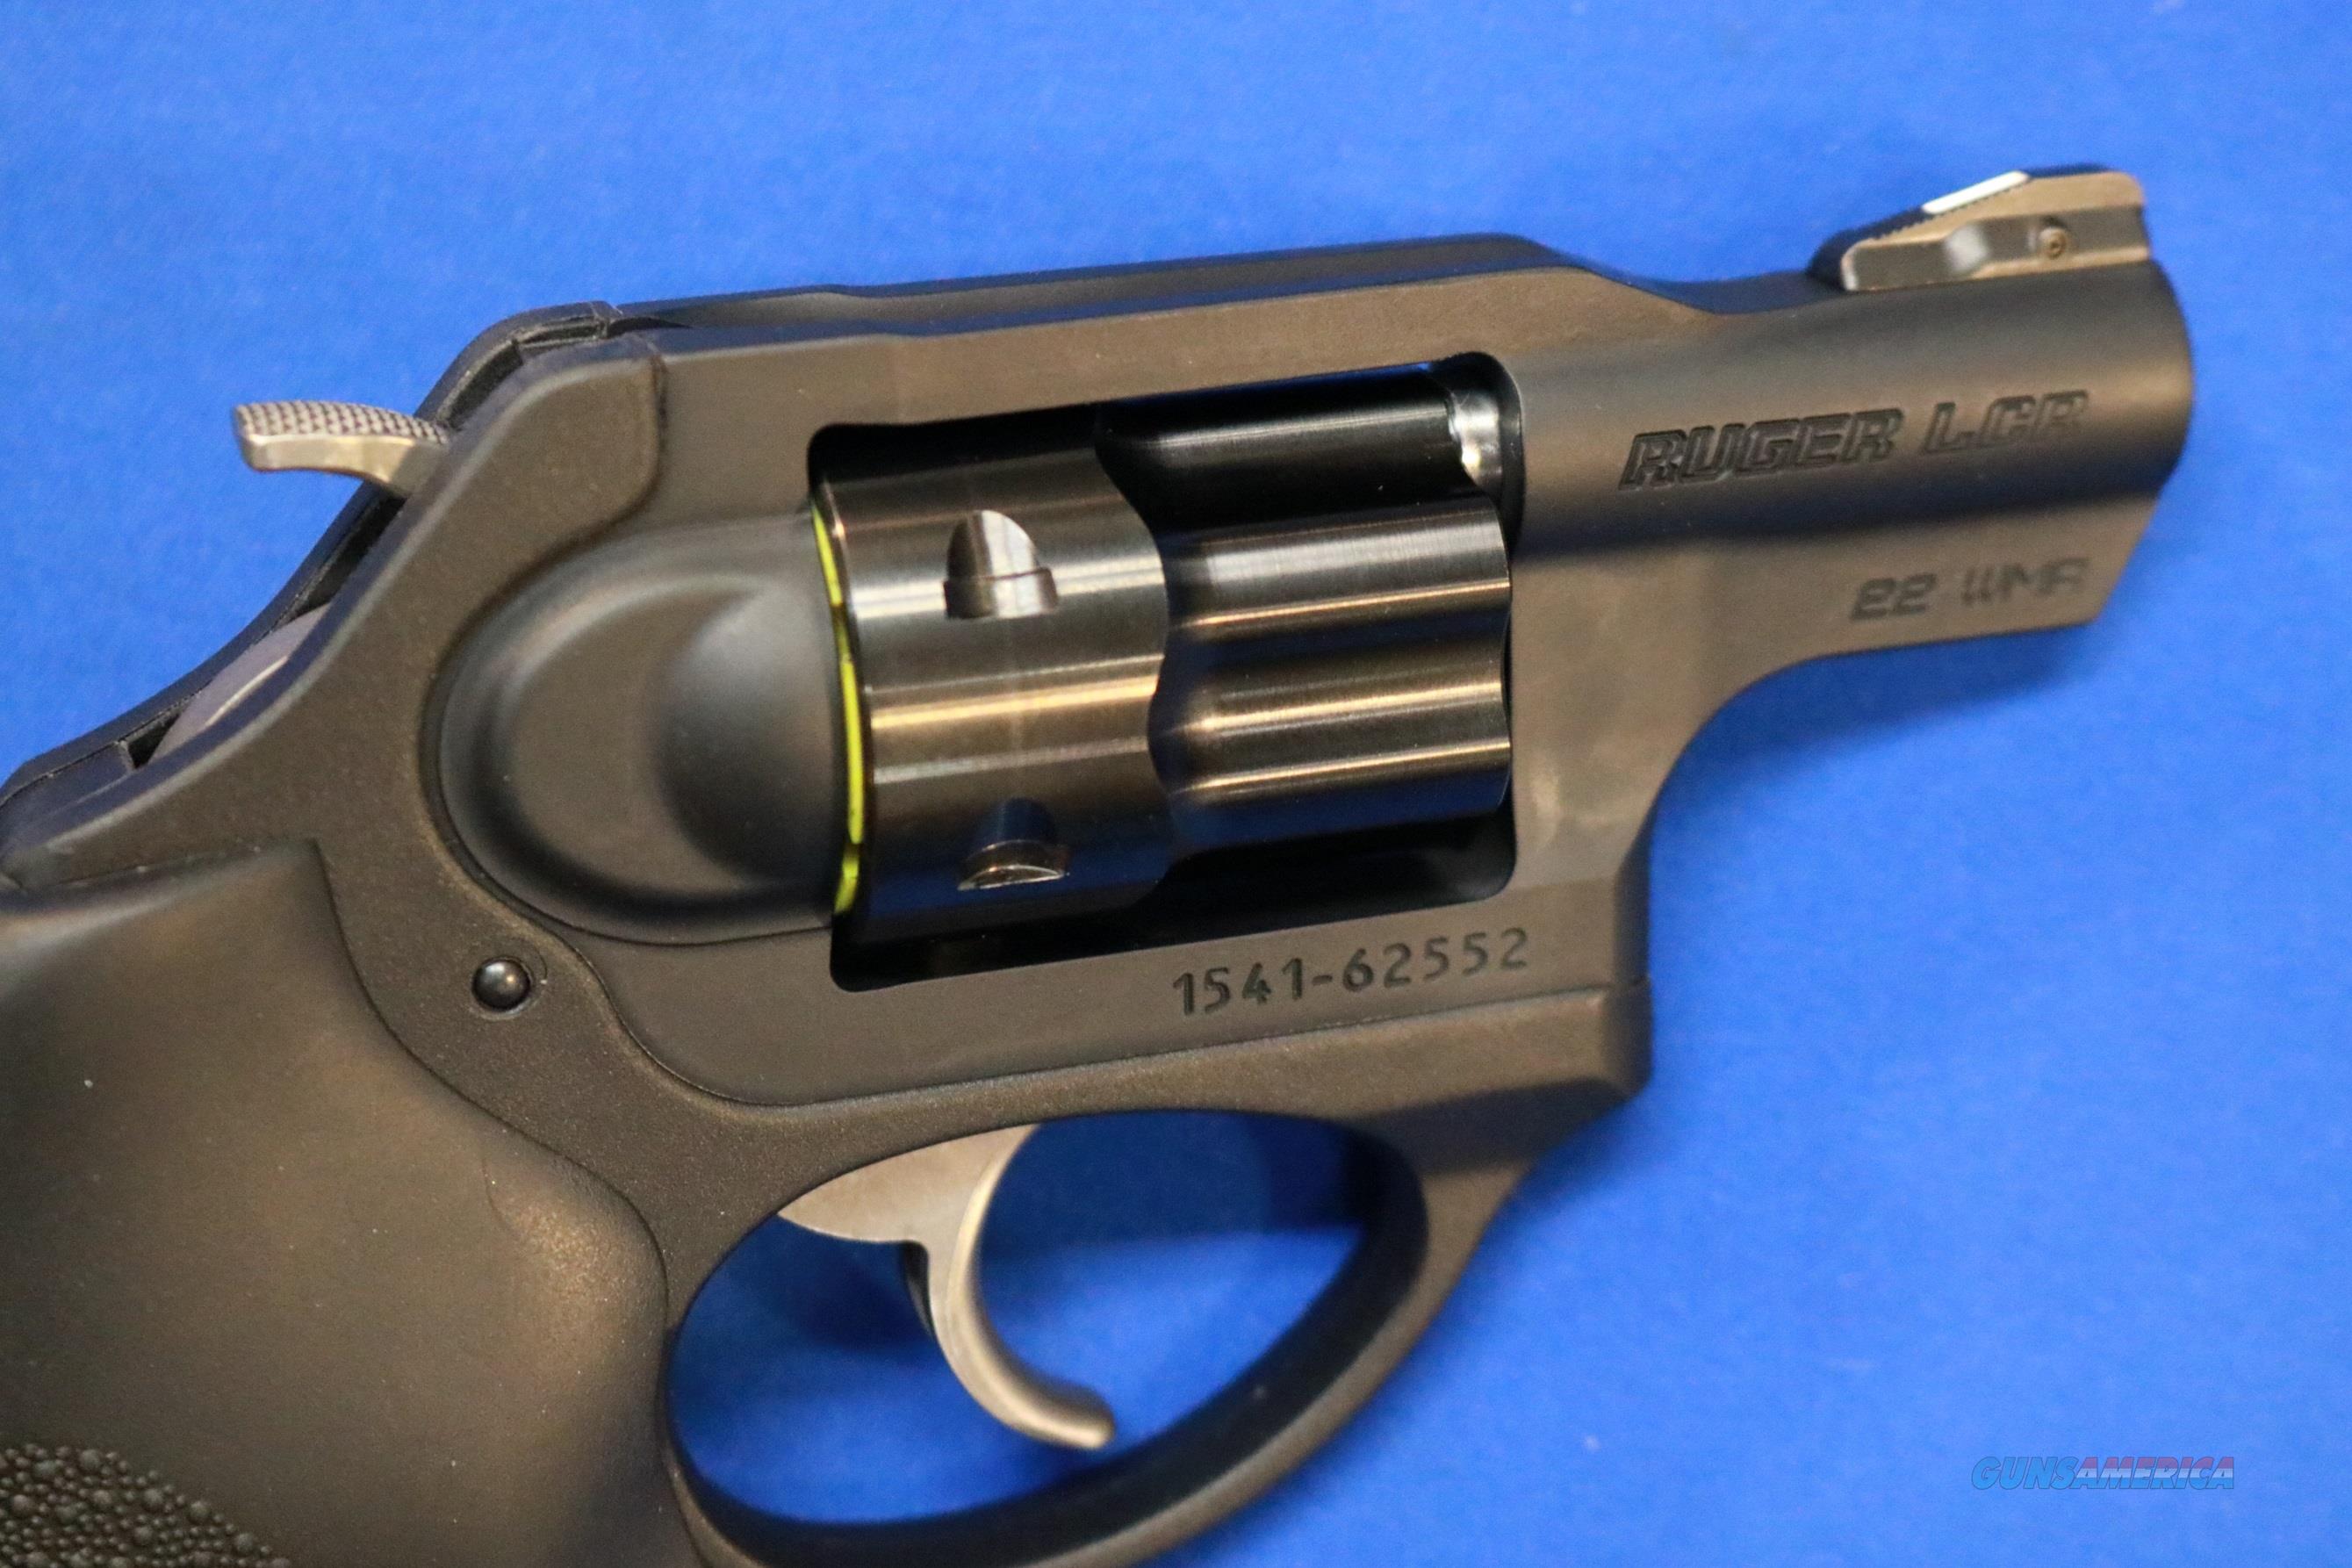 Ruger Lcr Revolver 22 Magnum New For Sale At 921569656 3270